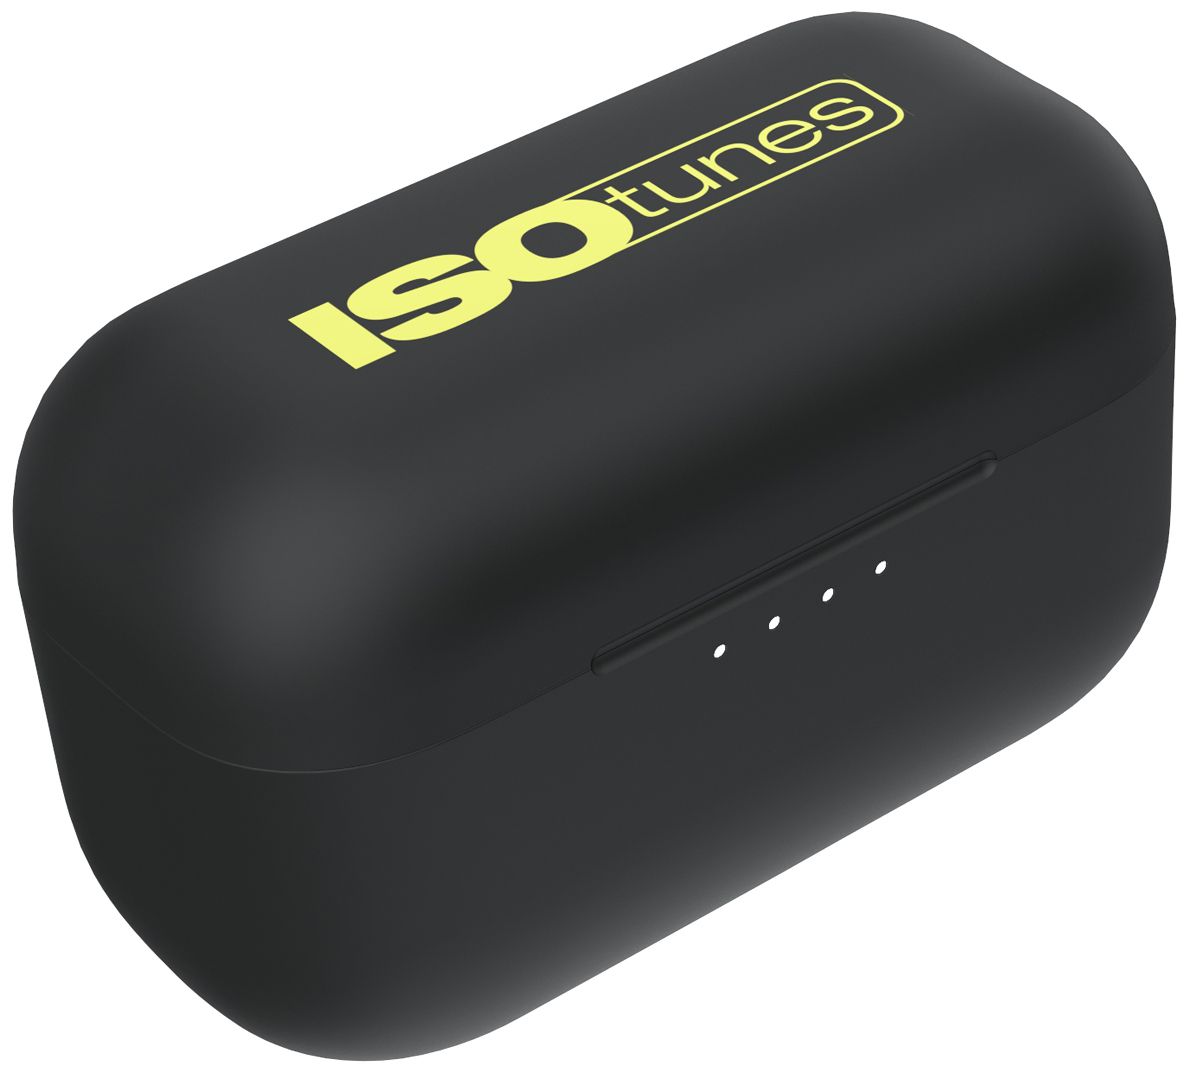 ISOtunes Free Aware Gehörschutz-Ohrenstöpsel - Bluetooth-Kopfhörer mit Noise Cancelling - EN 352 - SNR: 32 dB - Gelb